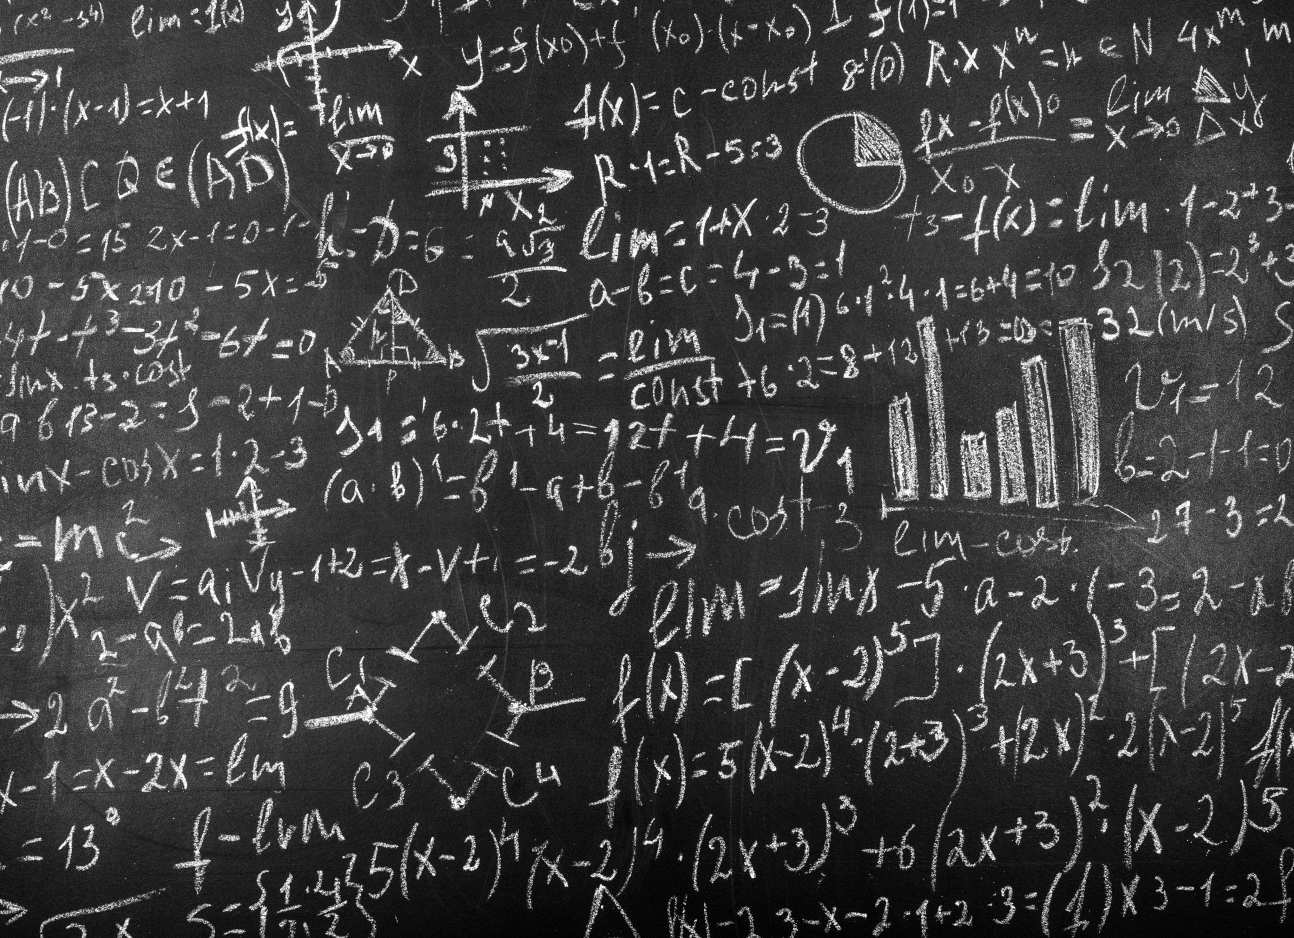 Mathematics equations on a blackboard